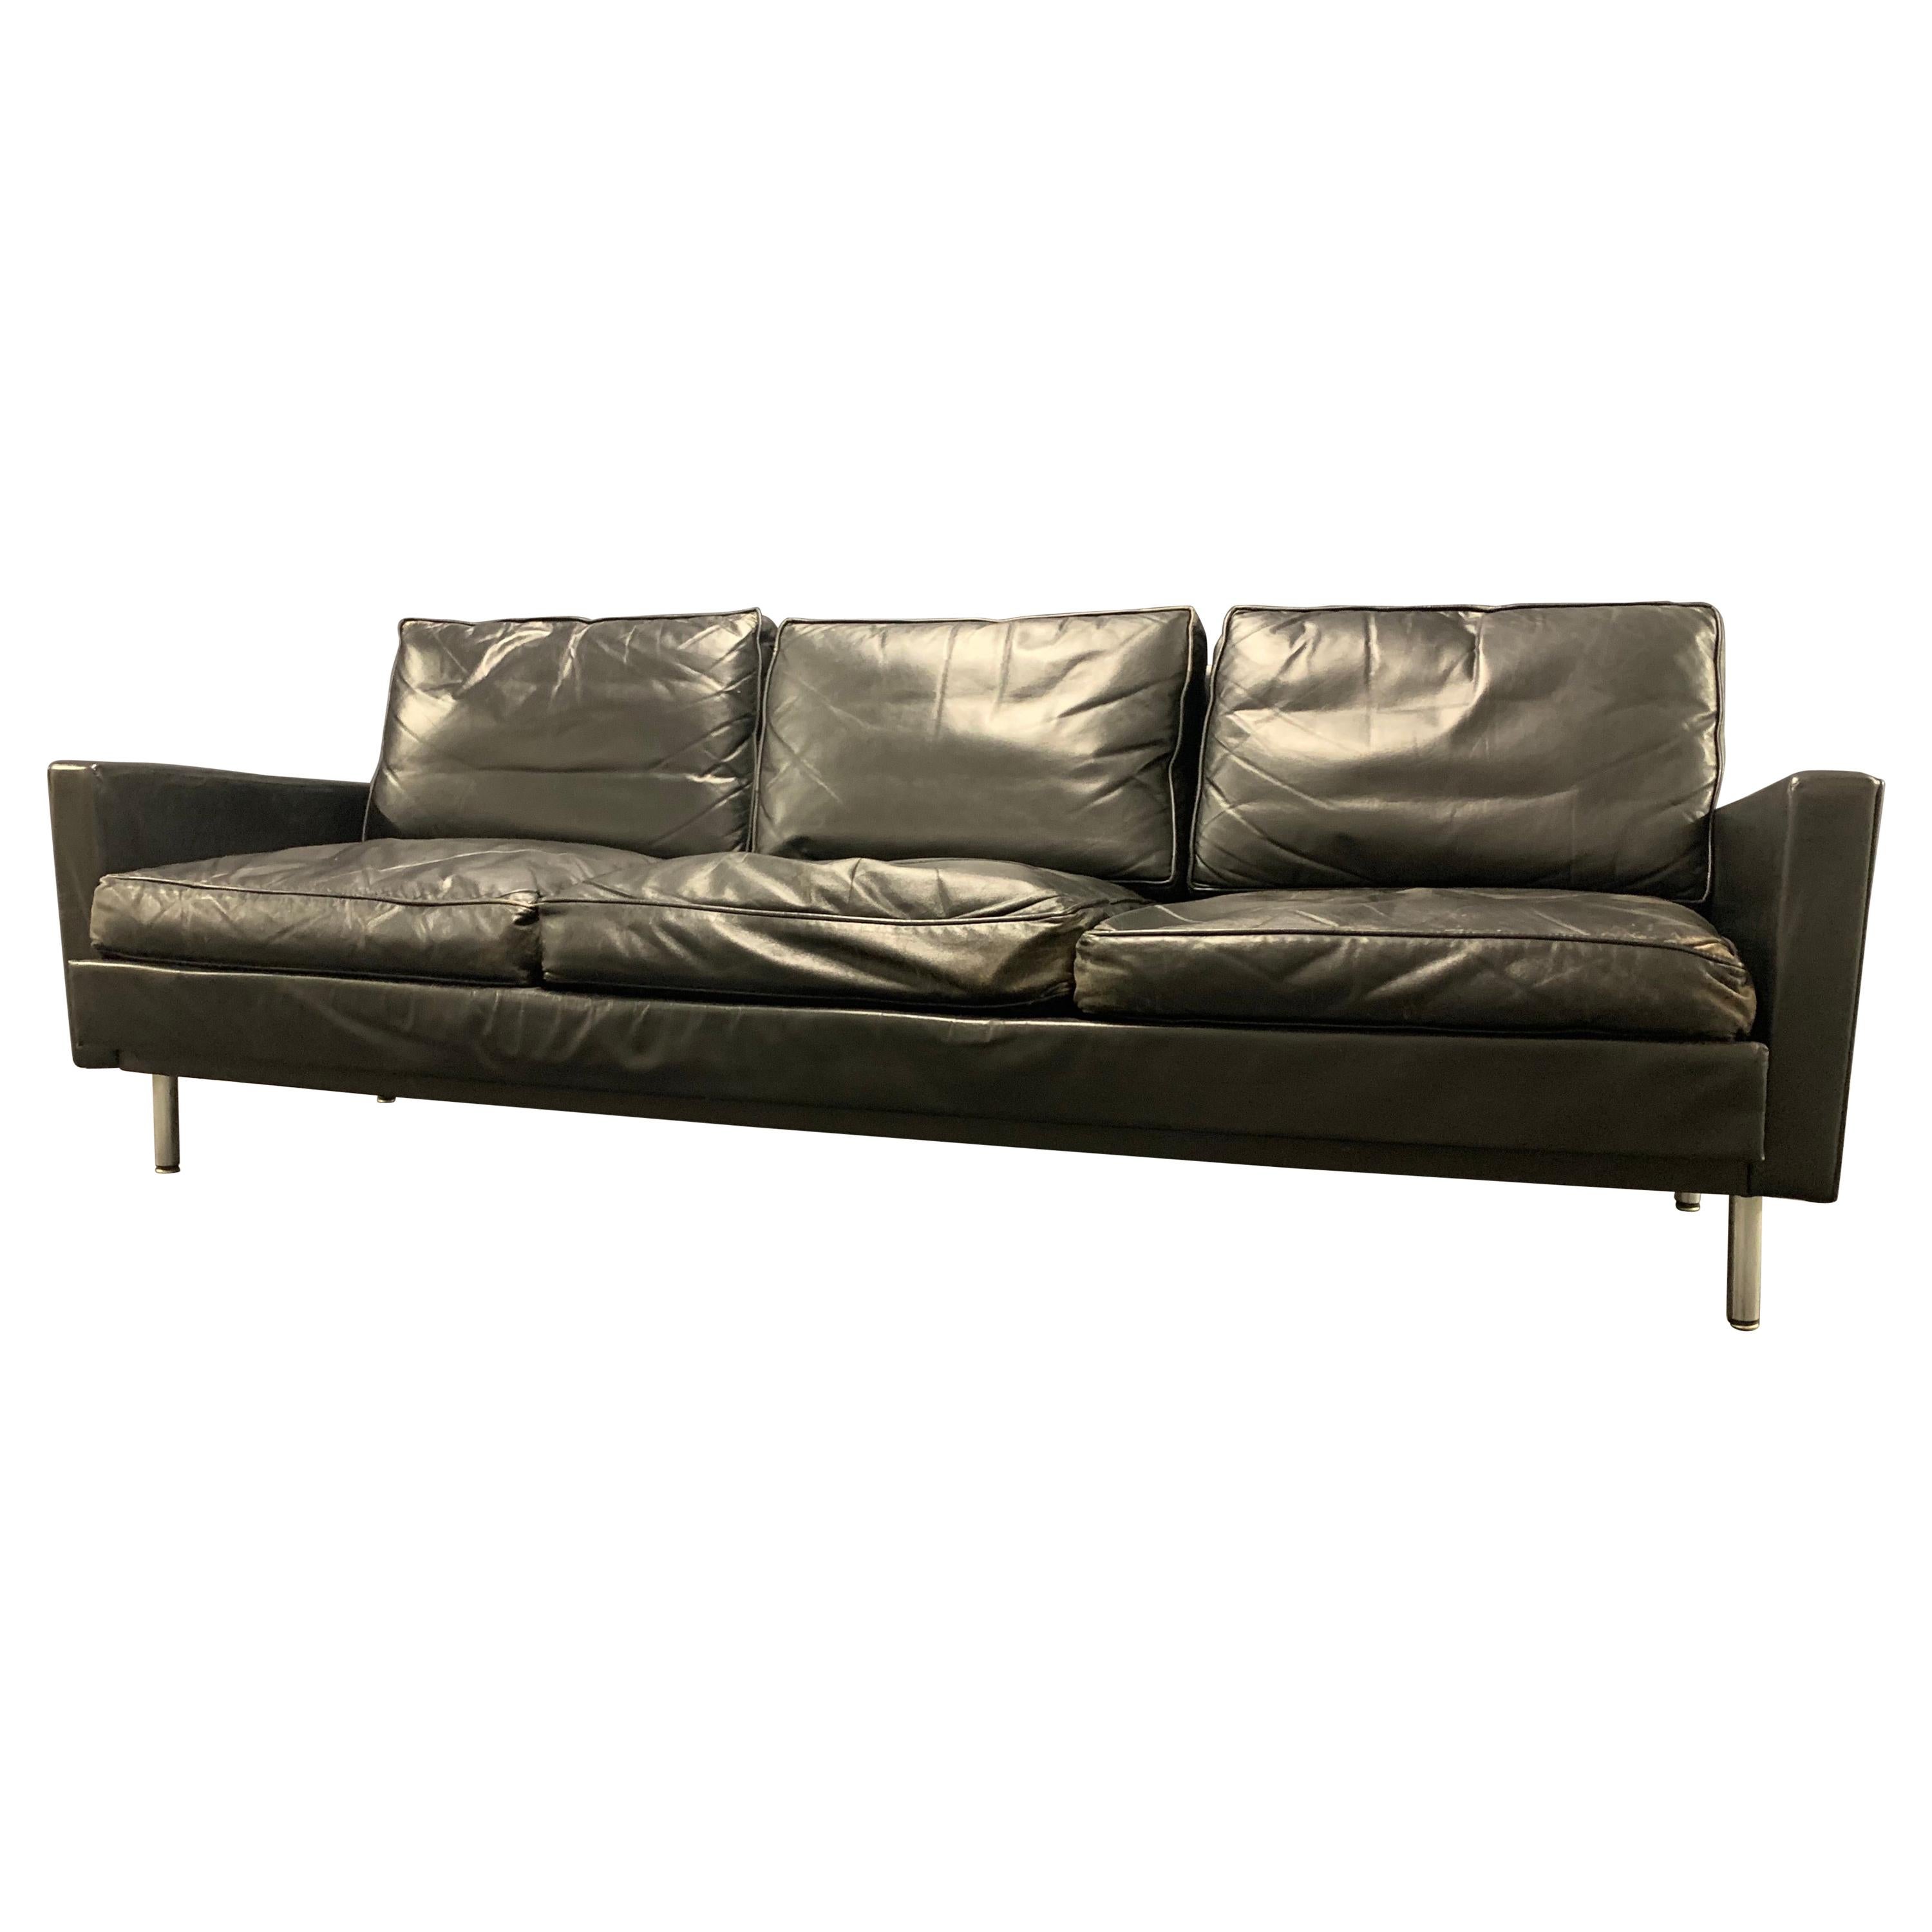 Rare and Exclusive Loose Cushion Sofa